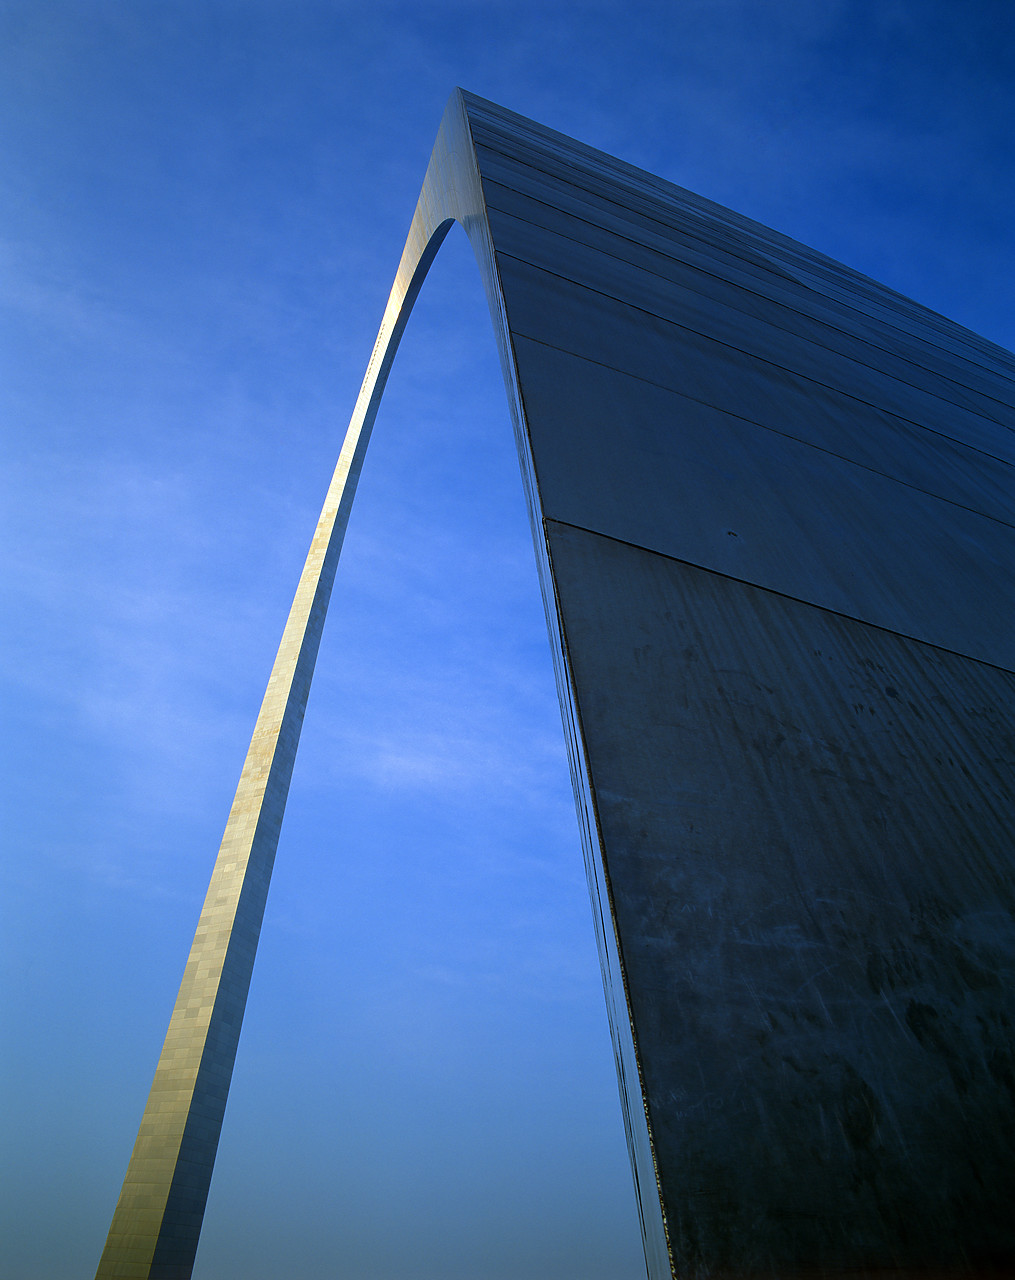 #200464-1 - The Arch, St. Louis, Missouri, USA